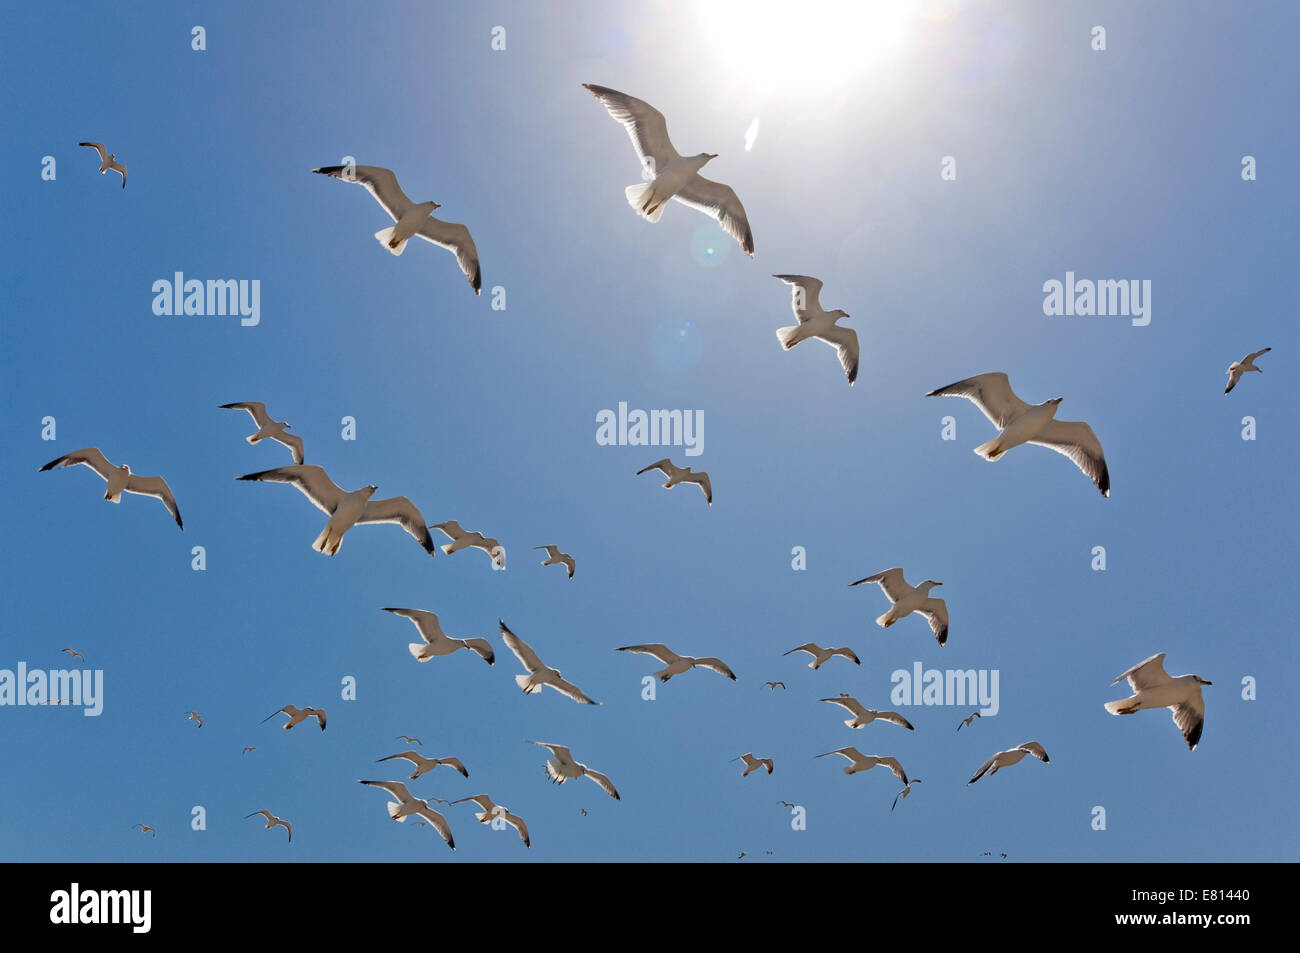 Horizontal close up of a flock of European herring gulls, Larus argentatus, inflight against a blue sky. Stock Photo